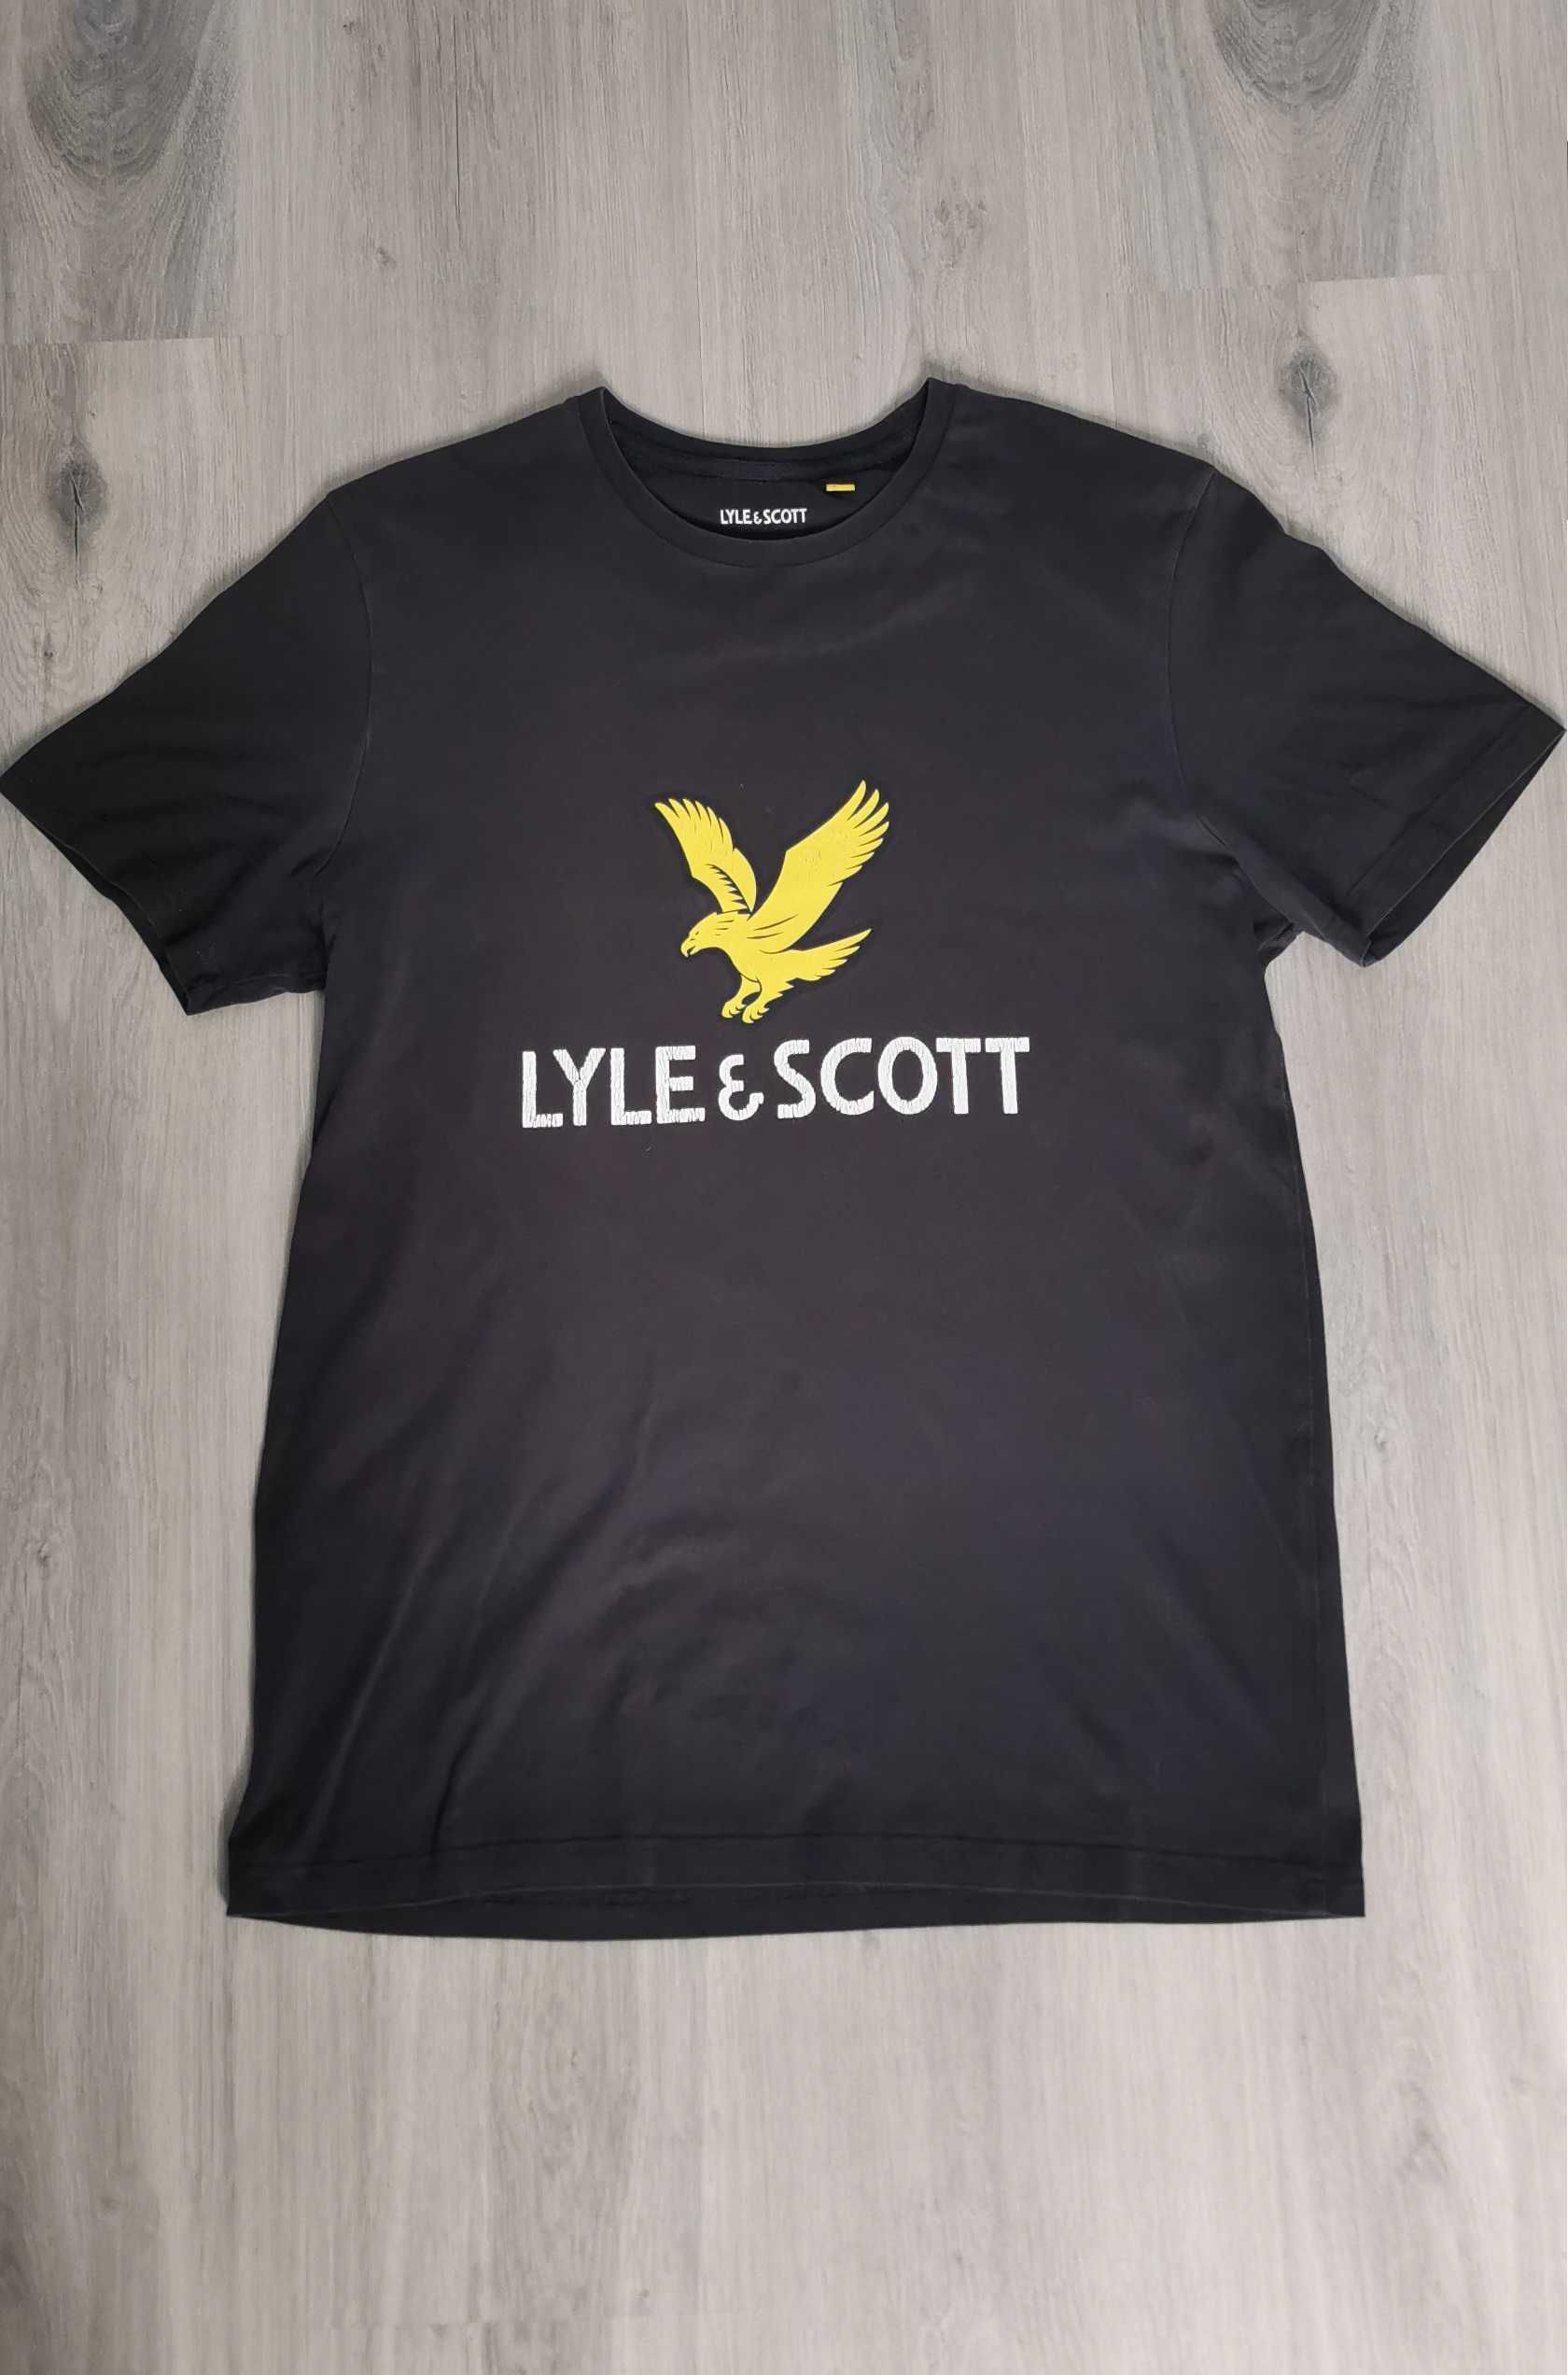 T-shirt Lyle & Scott big print duże logo rozmiar S/M black czarna